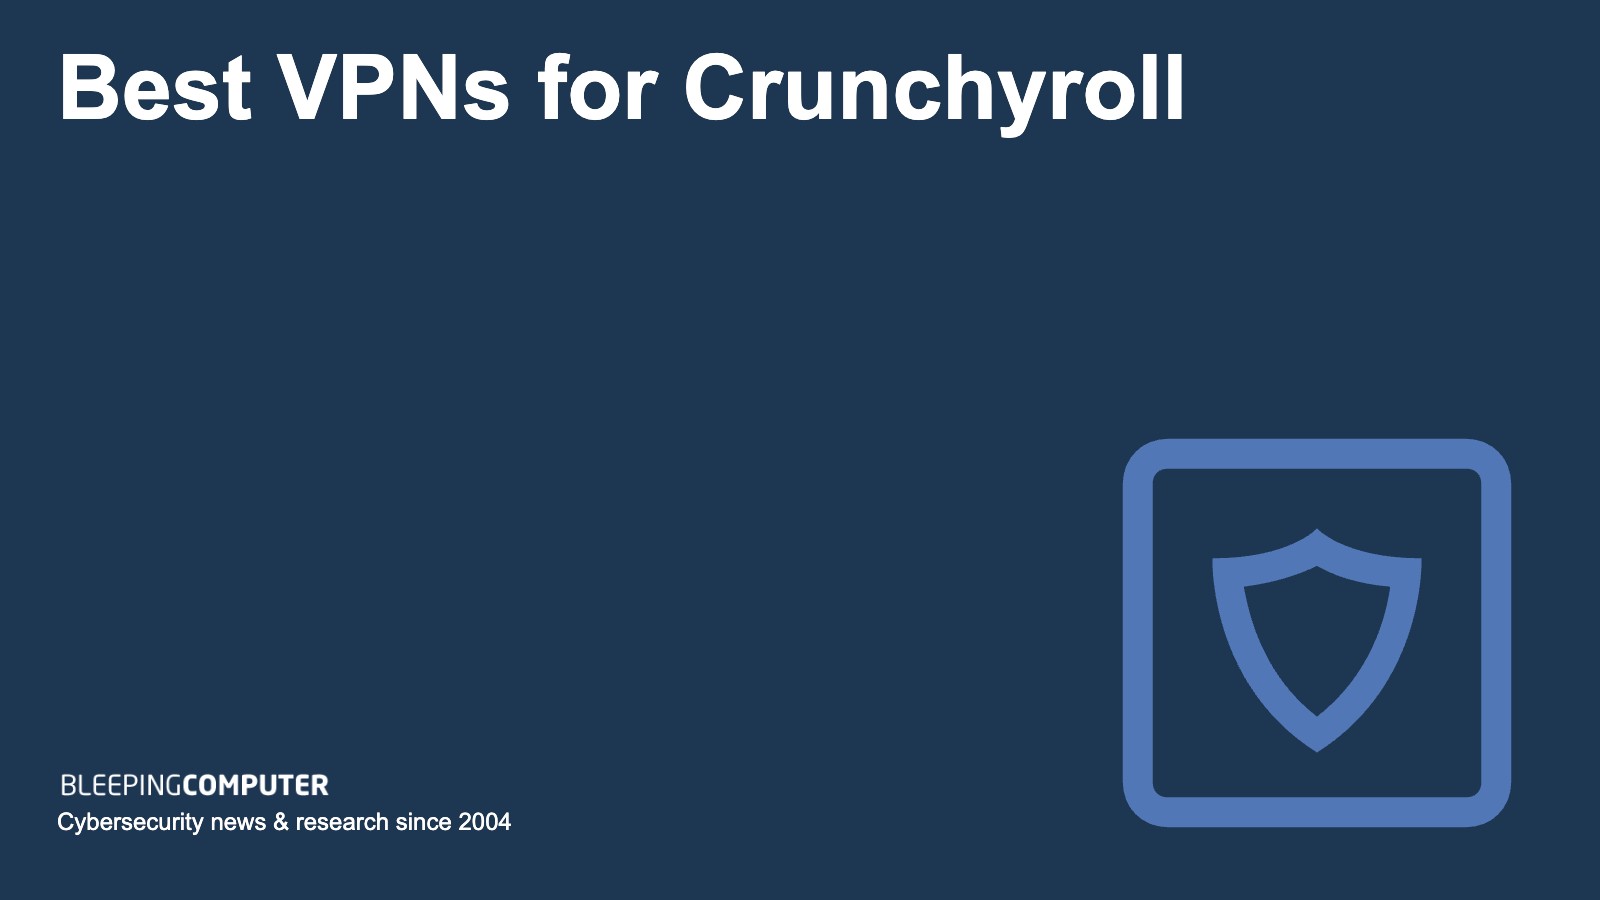 Crunchyroll Premium at the best price